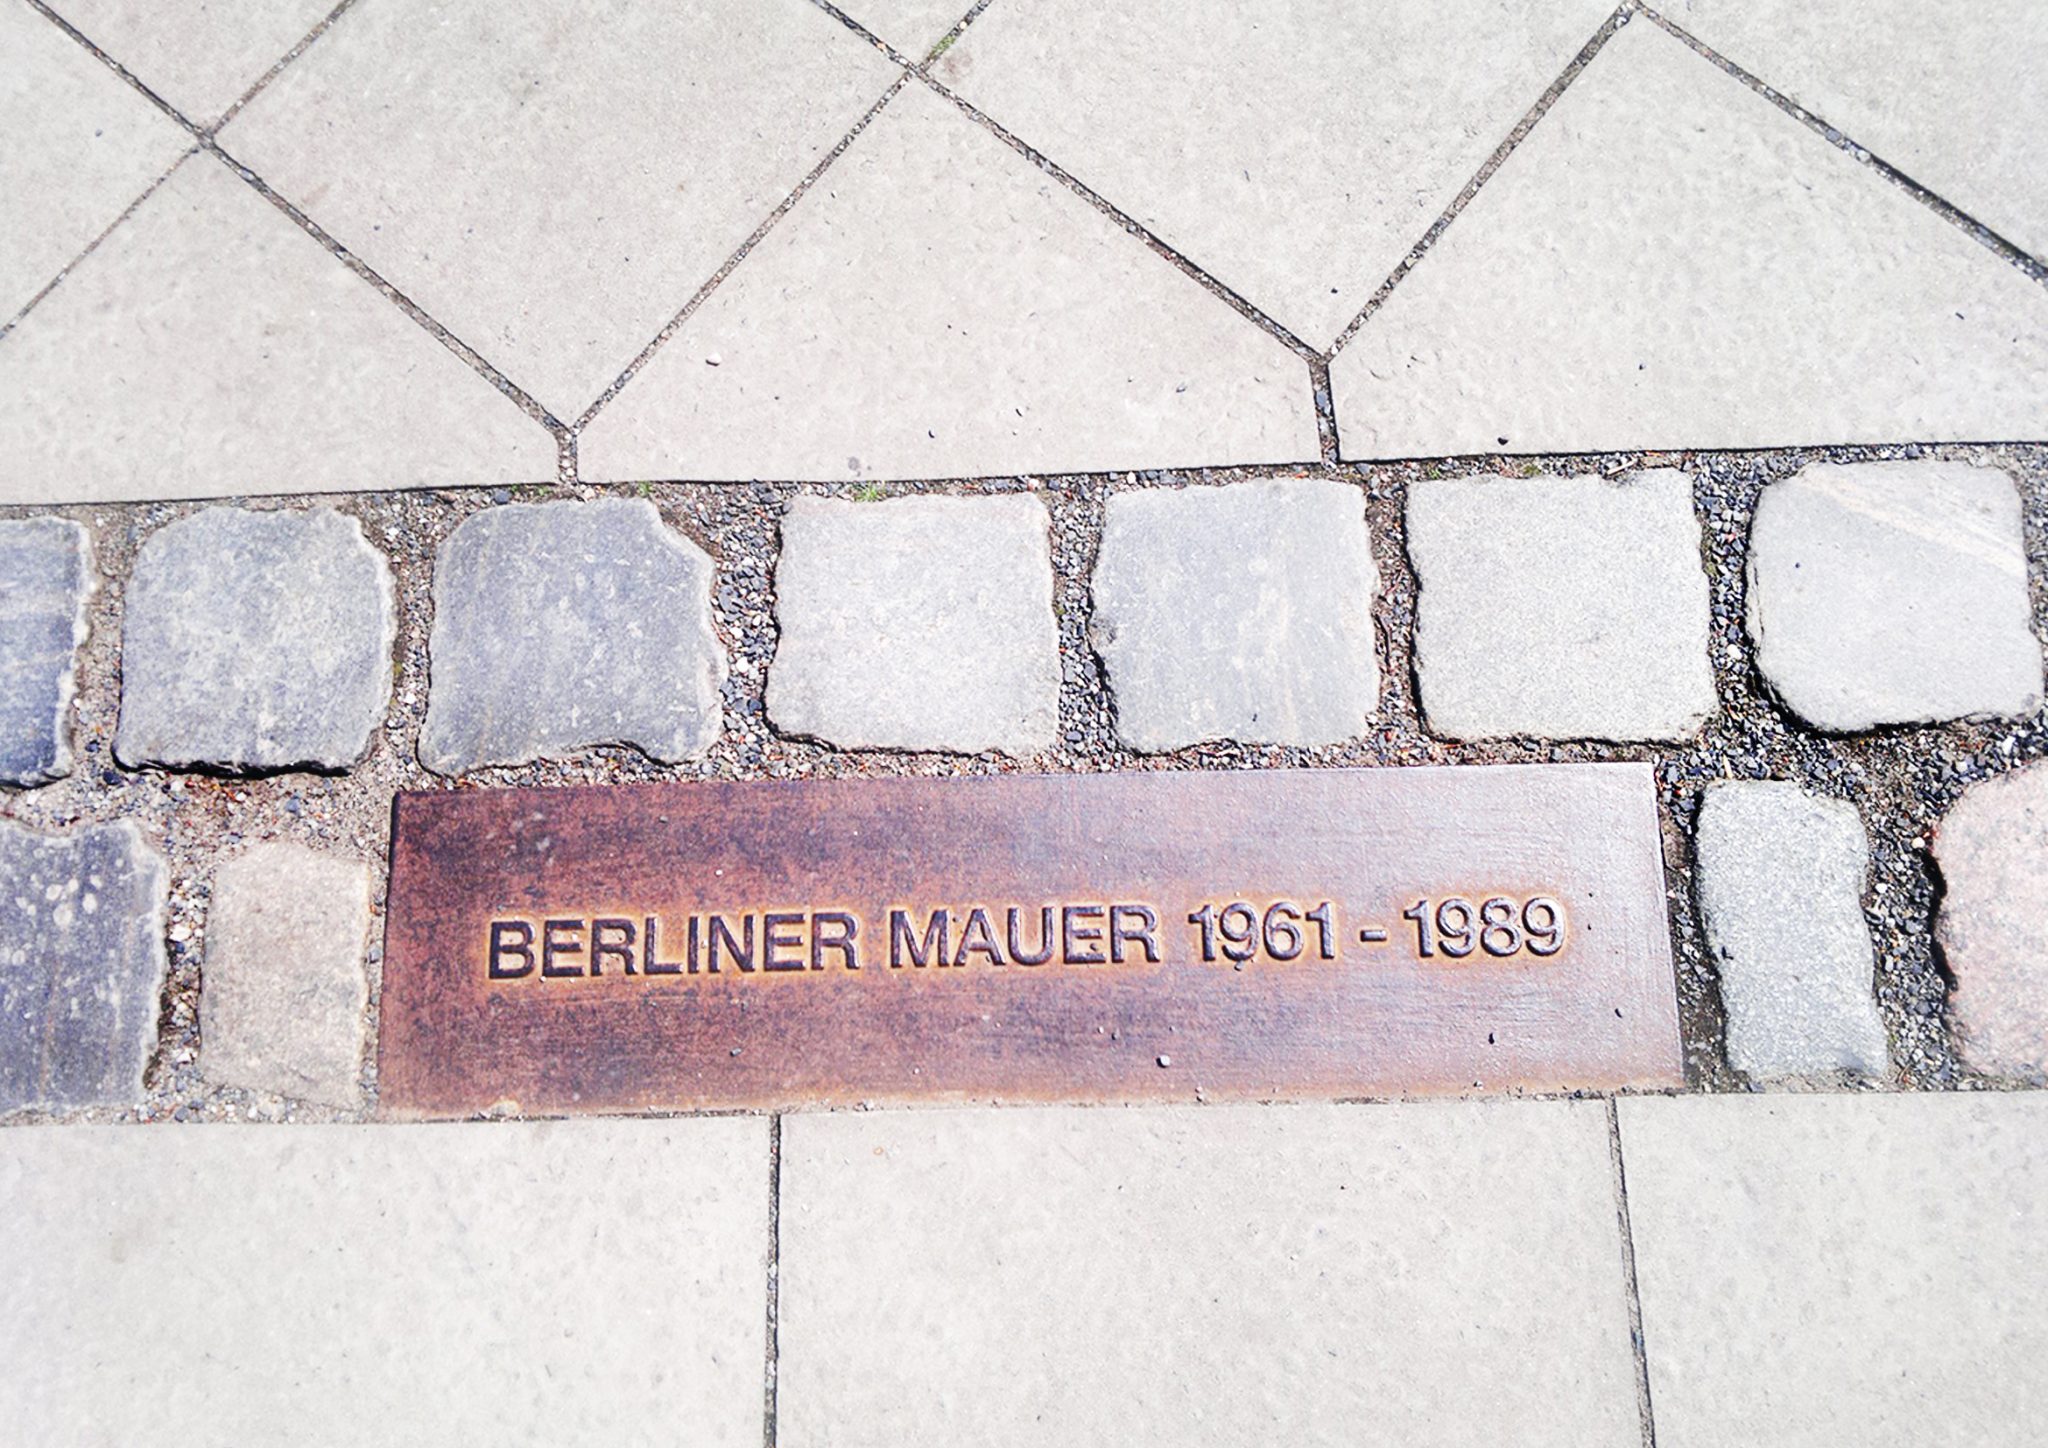 018 berlin - Berlin - Architour